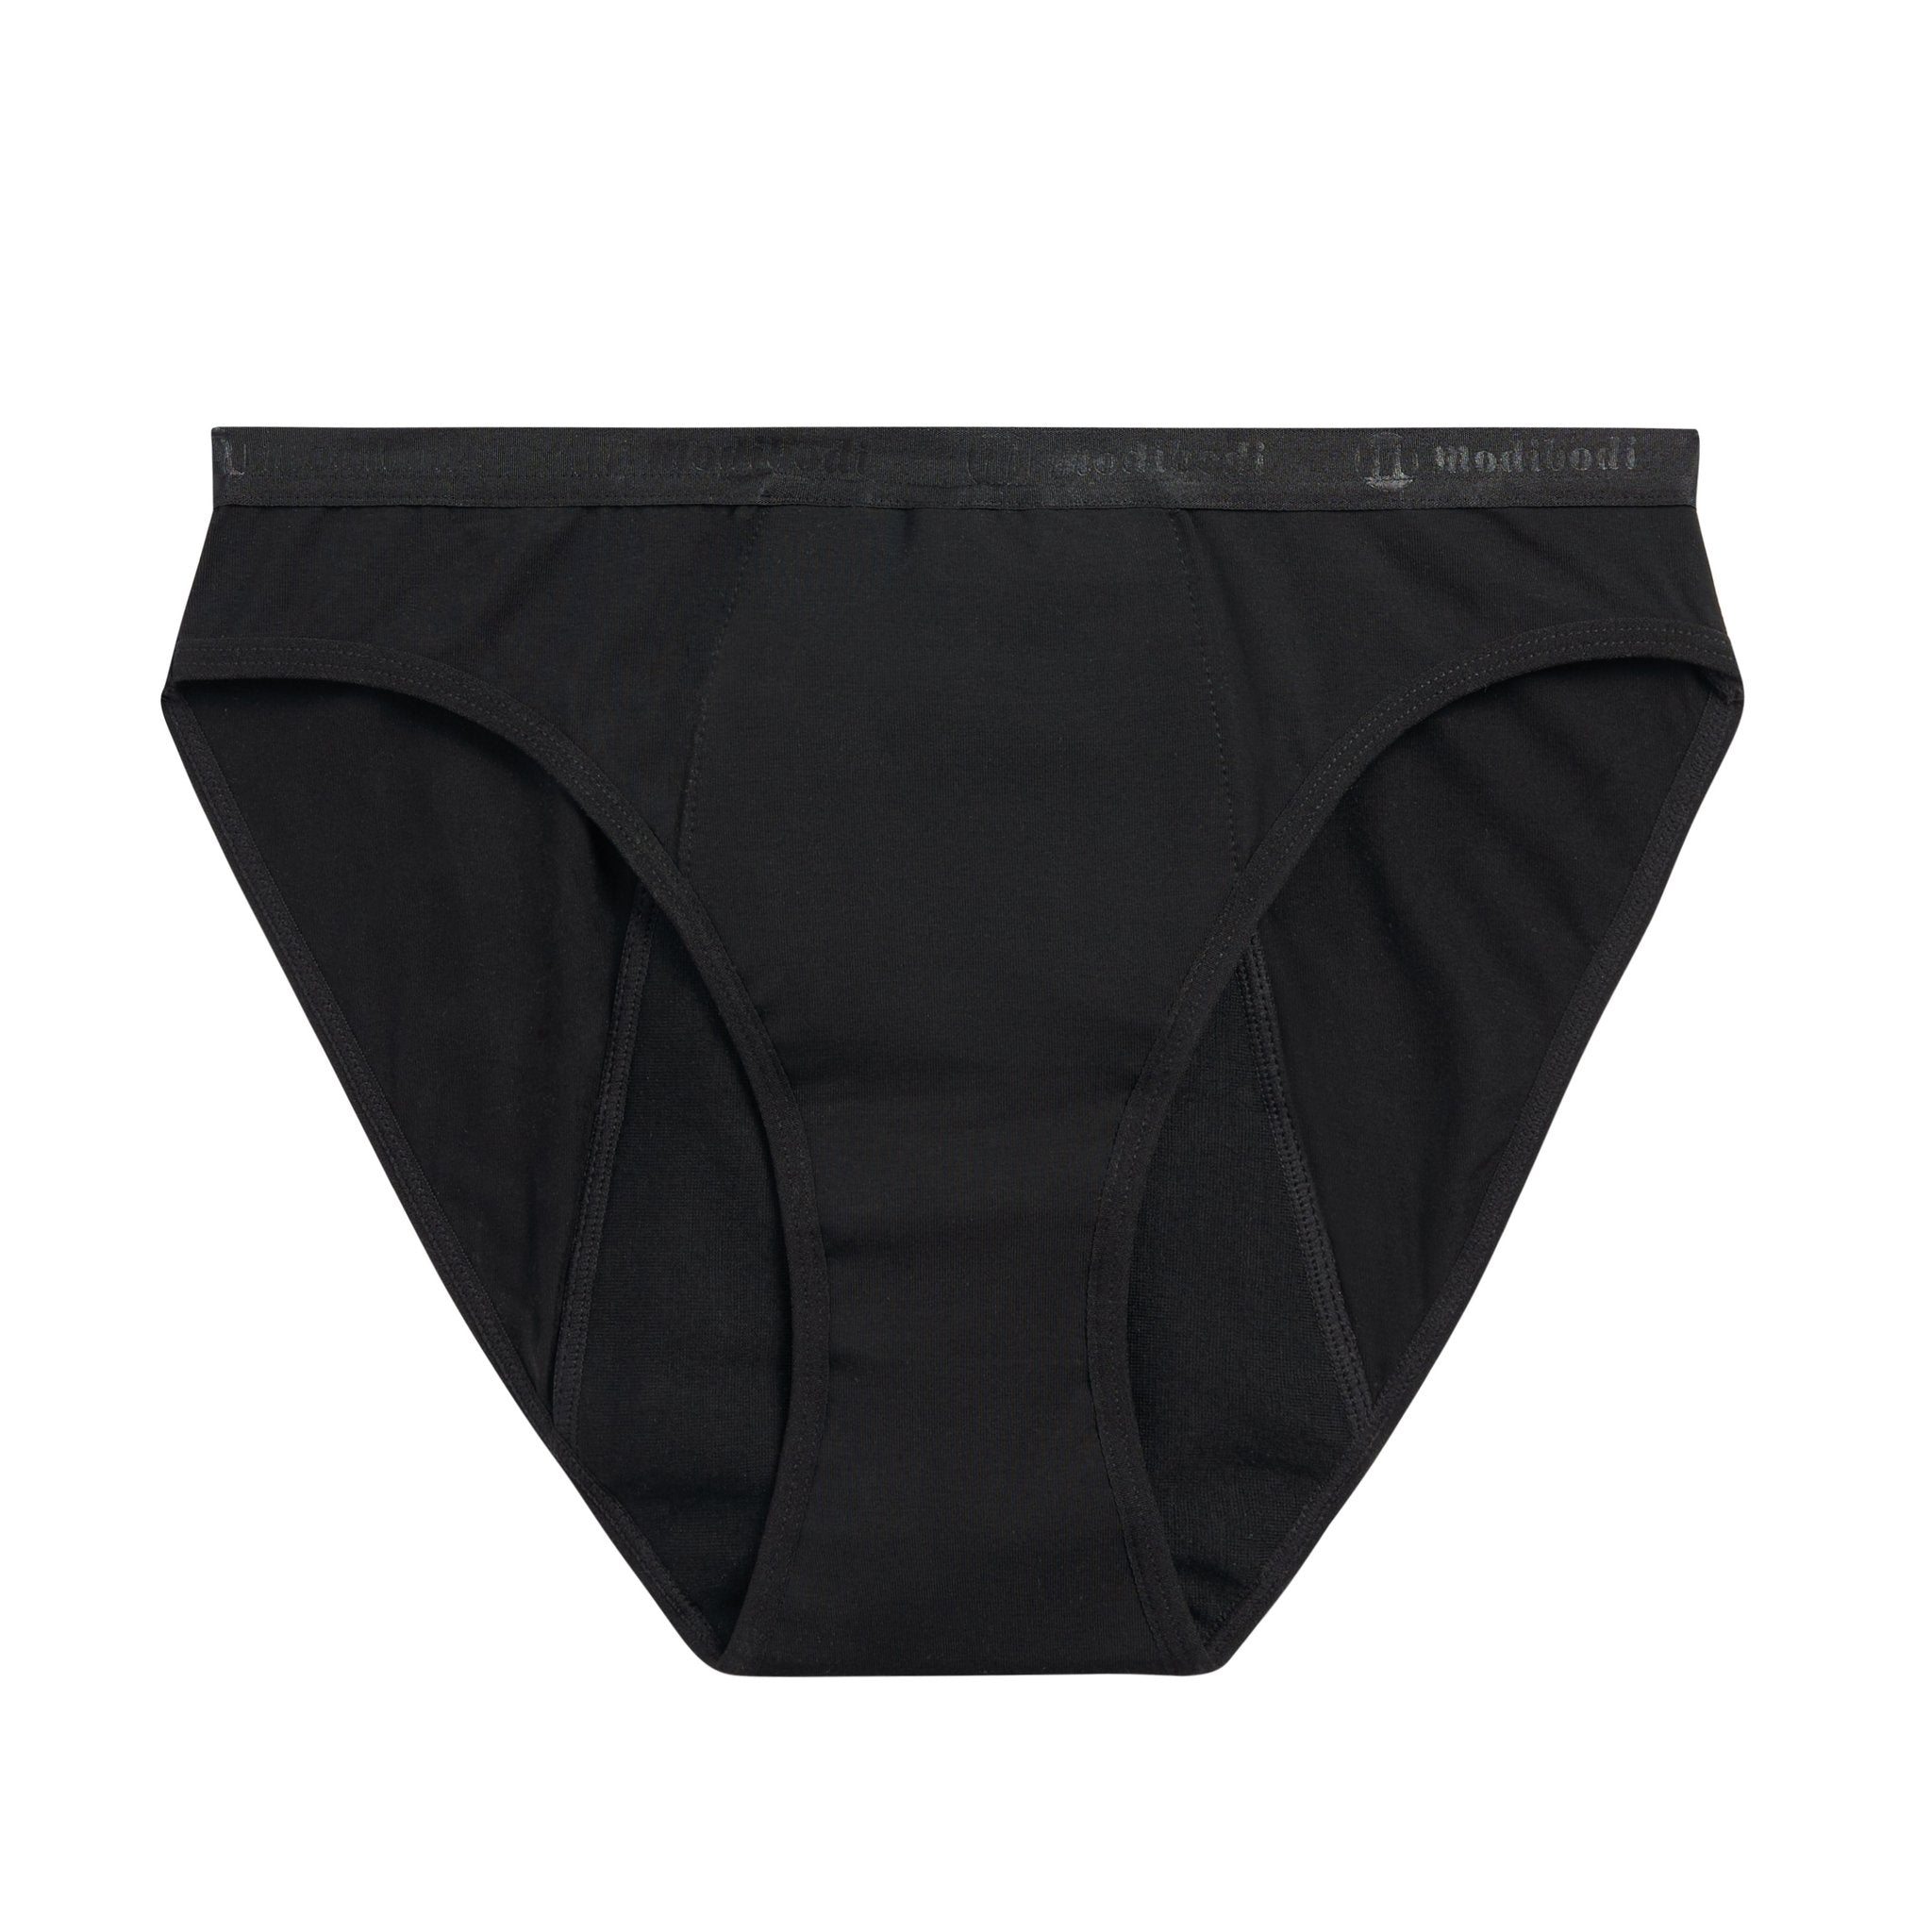 Saalt Period Underwear Elemental Mesh Hipster - Regular Absorbency